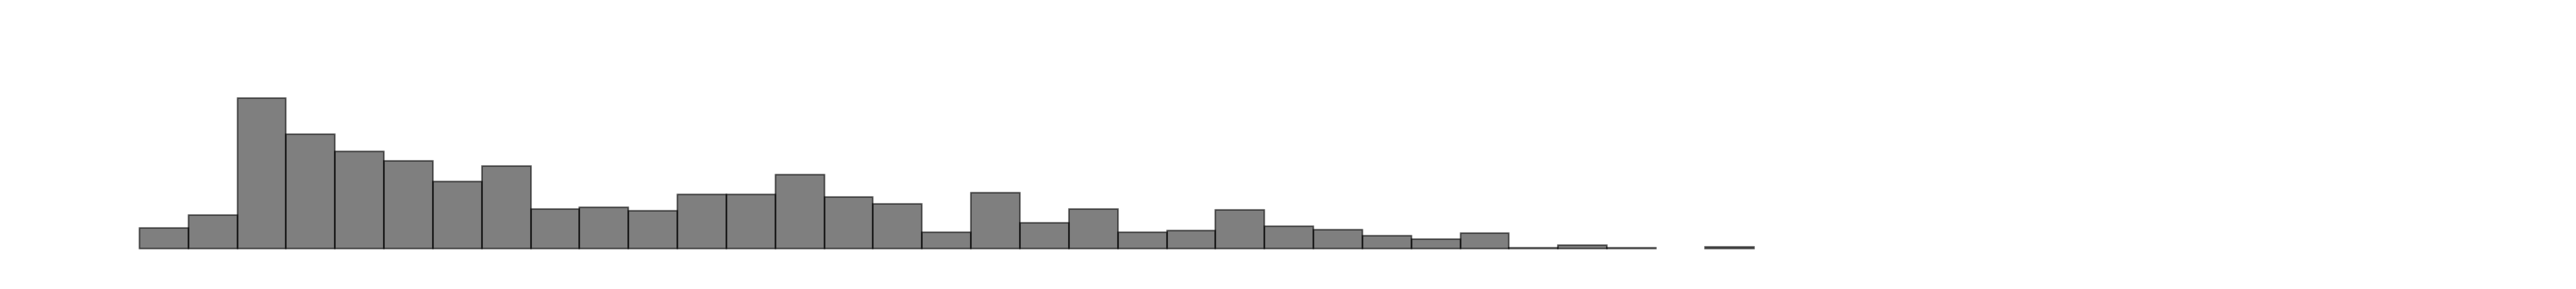 Example of histogram plots.